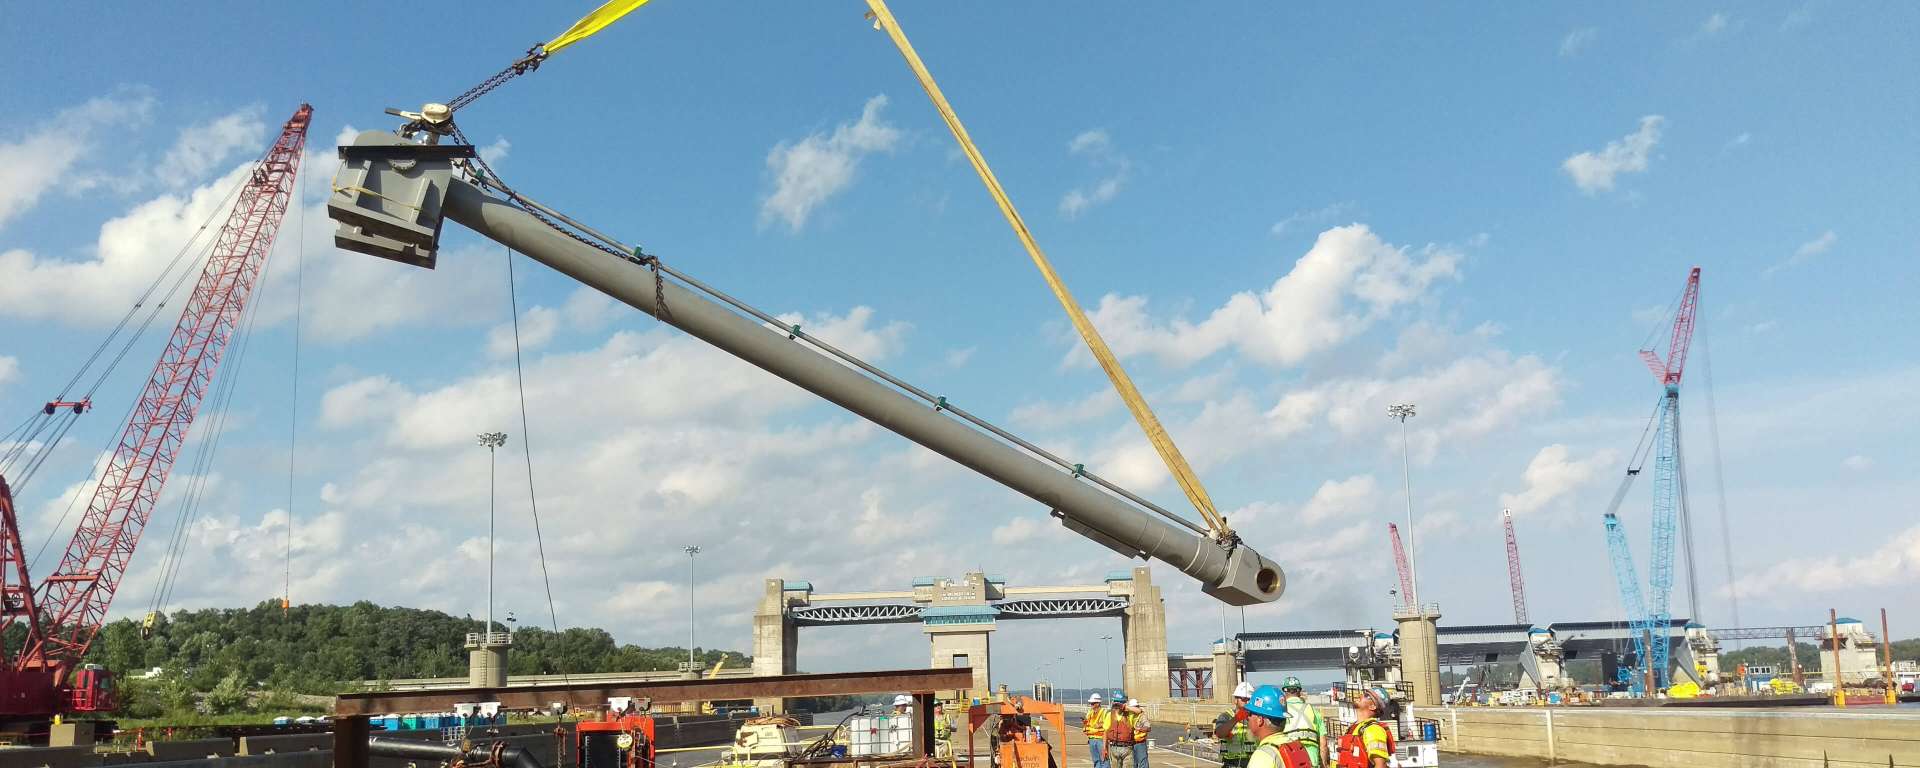 Custom large hydraulic cylinder being lifted by crane